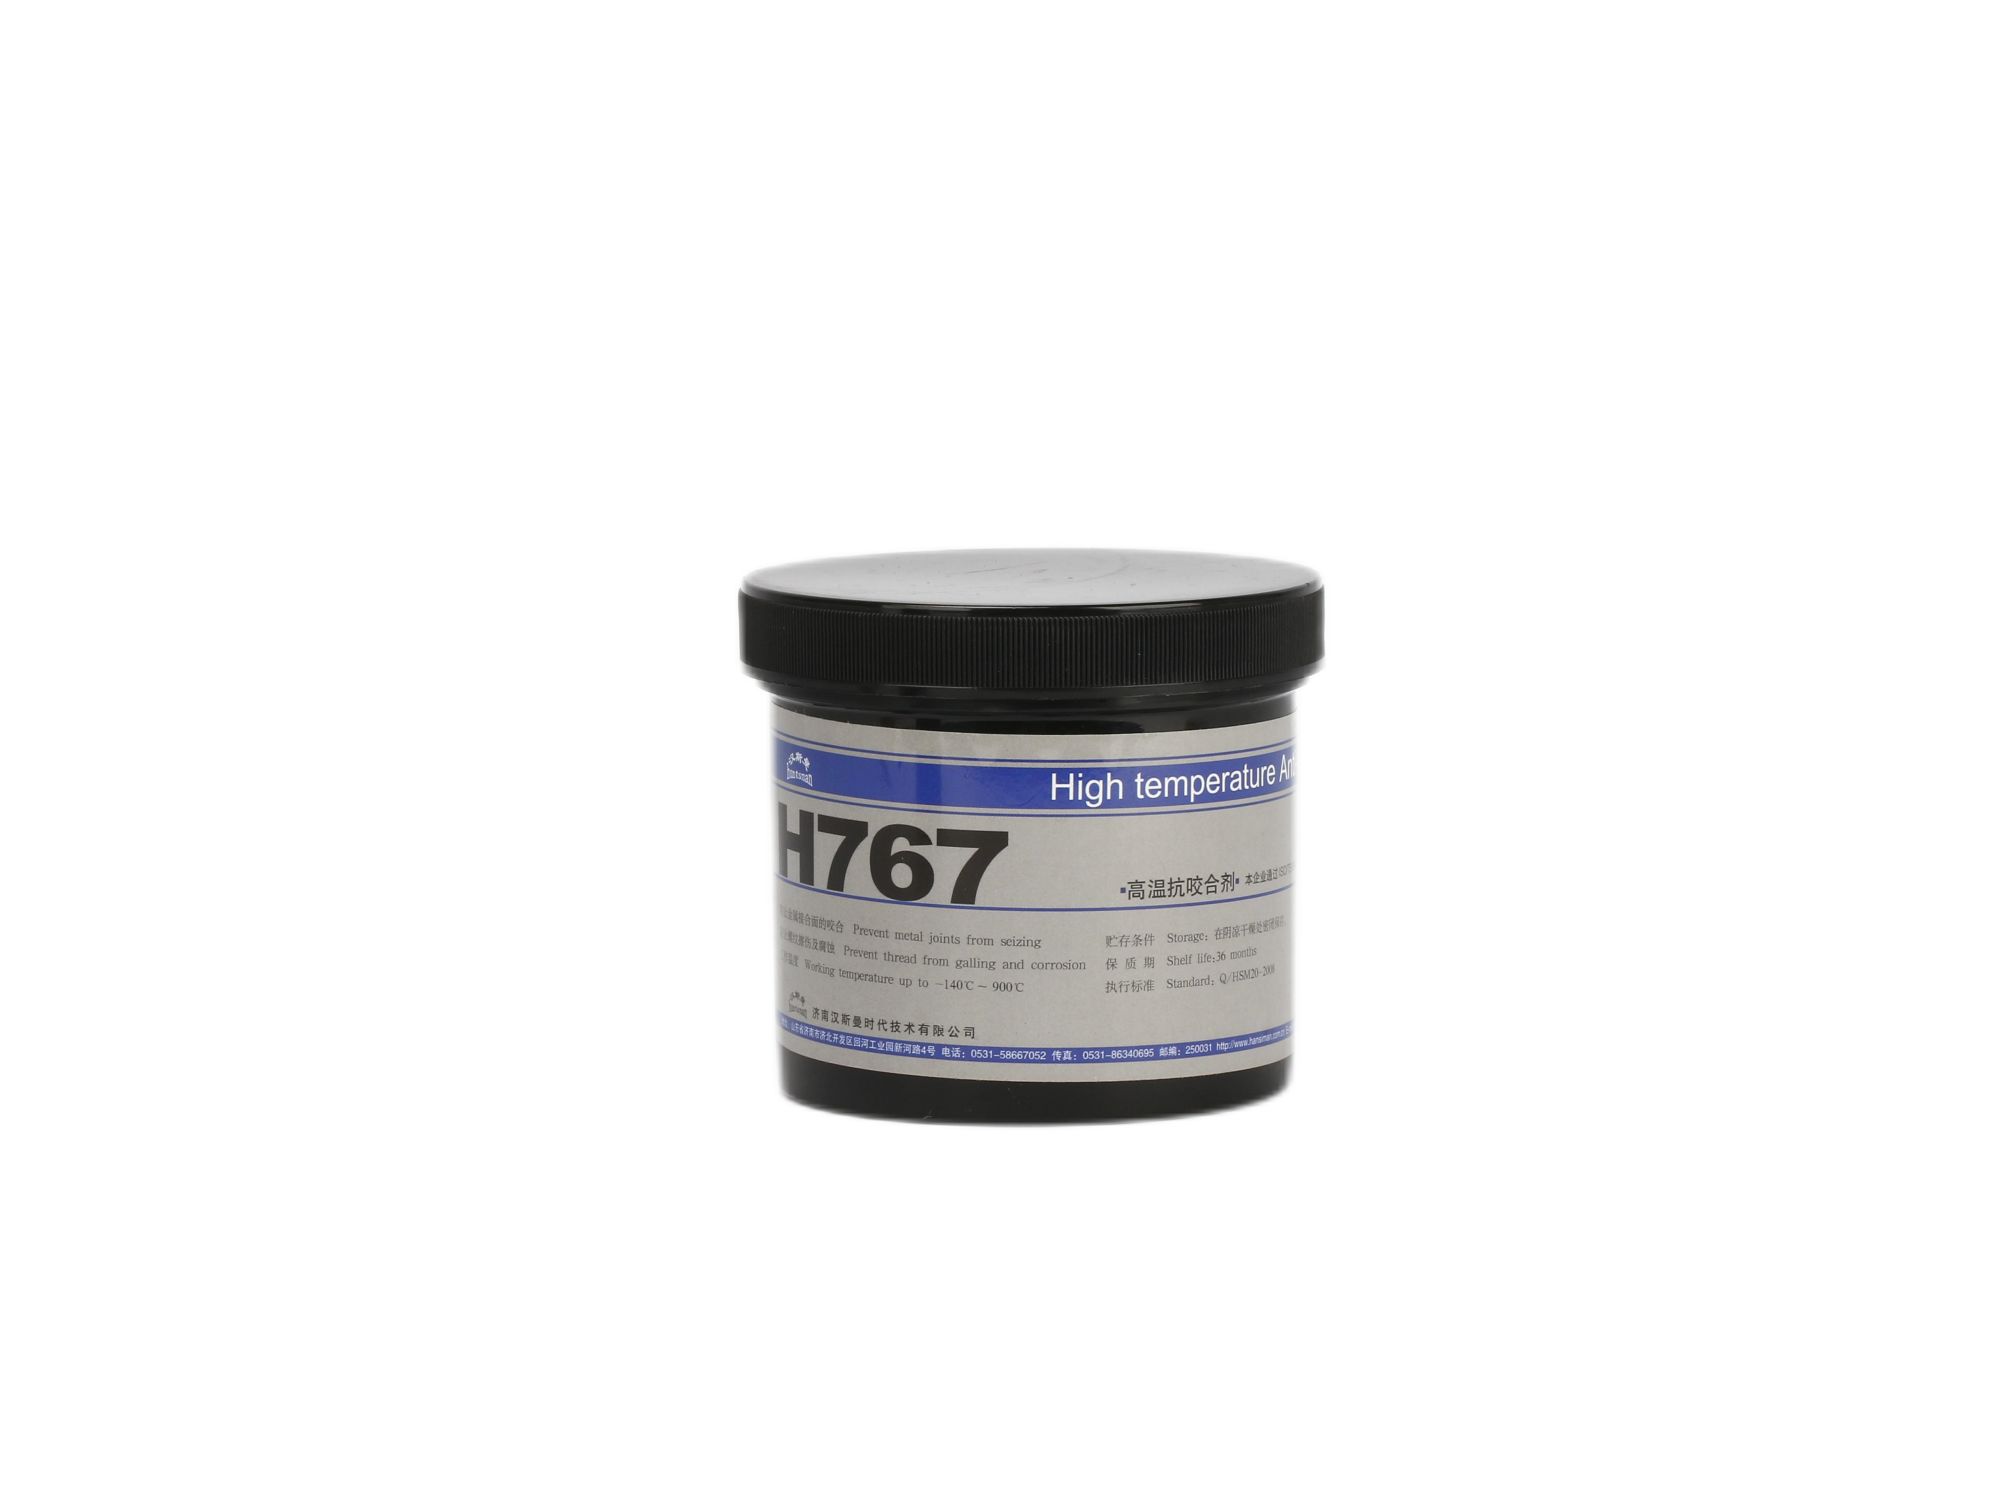 Hansman H767 high temperature anti-seize agent